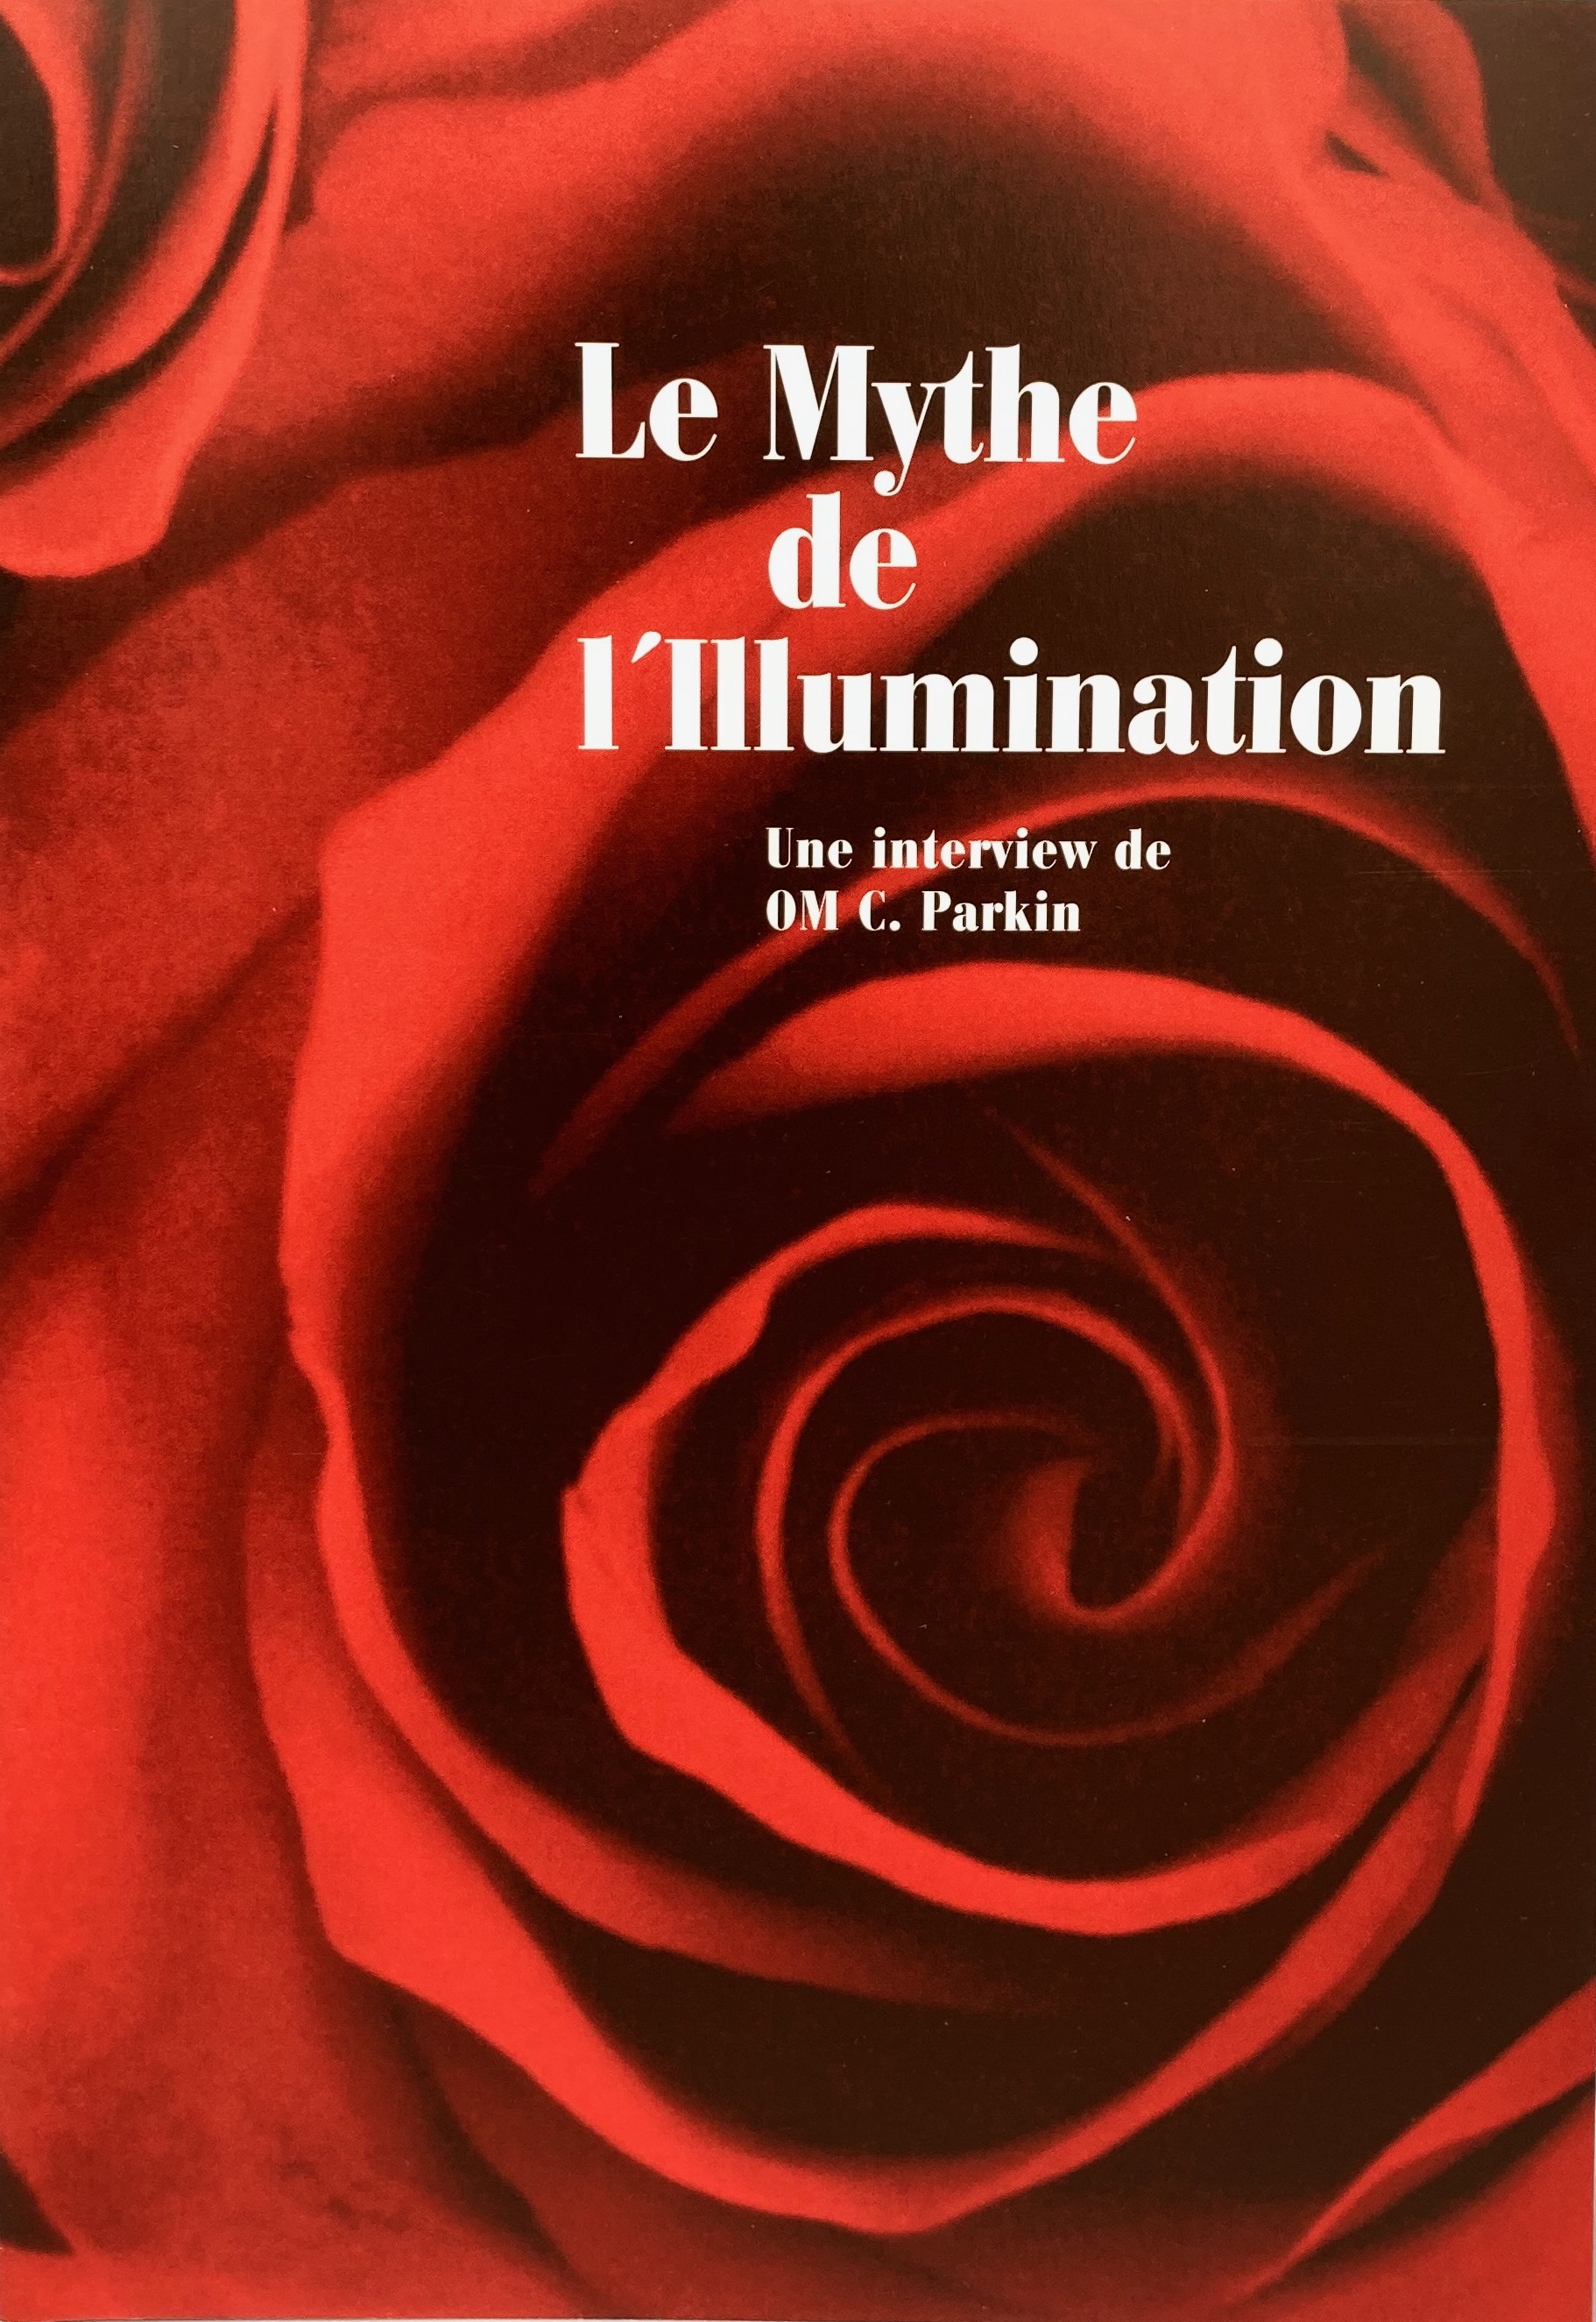 Le Mythe de l' Illumination